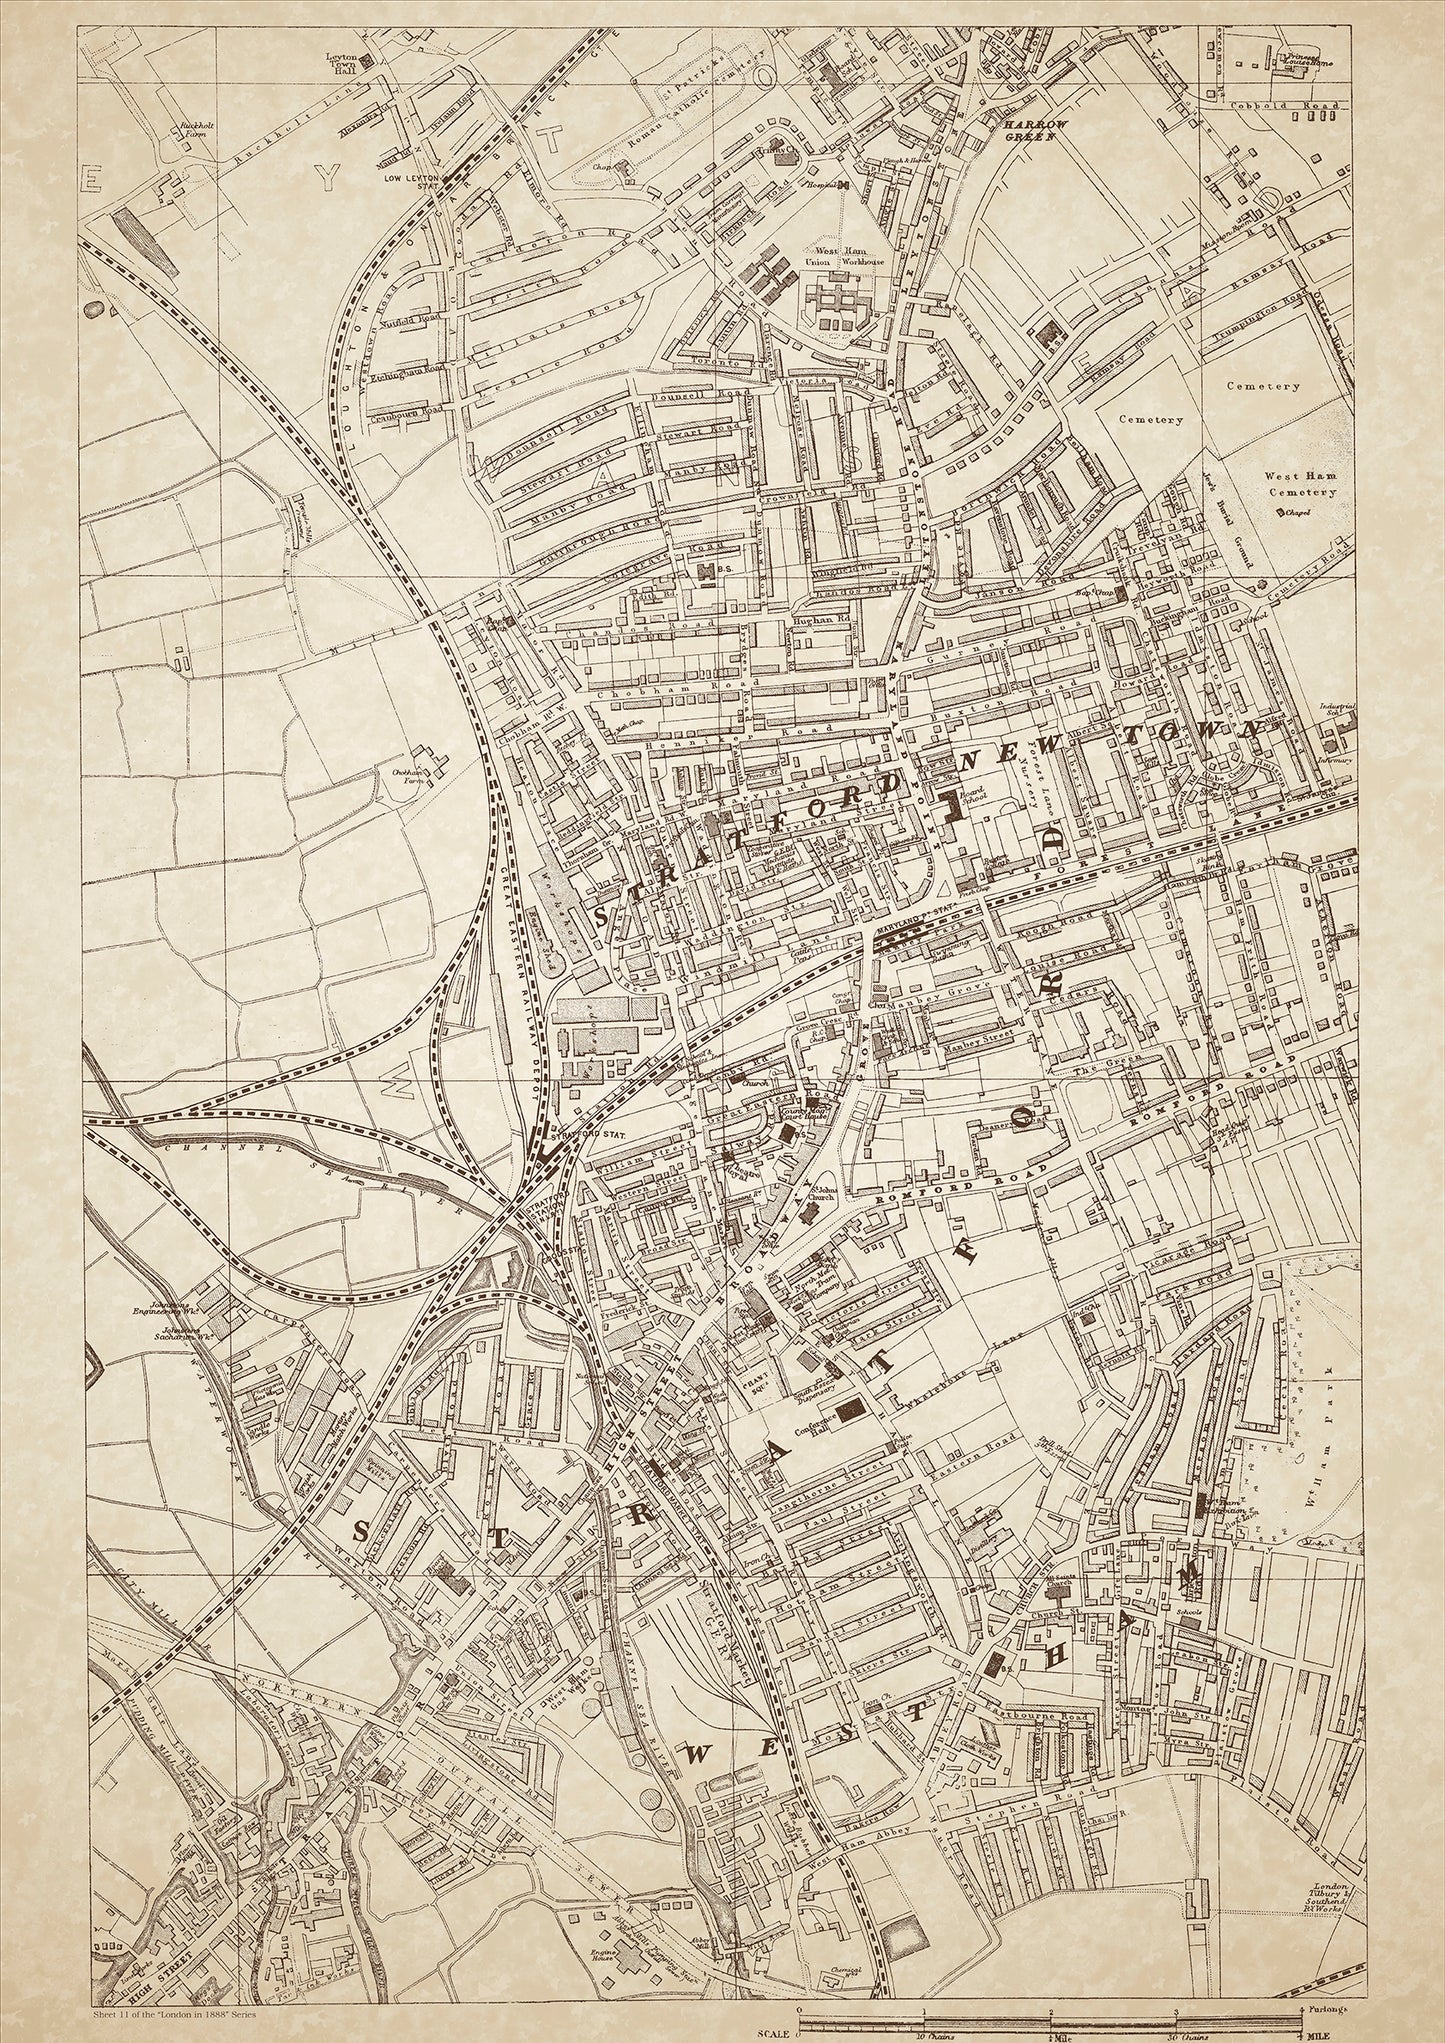 London in 1888 Series - showing Stratford, Harrow Green, West Ham - sheet 11